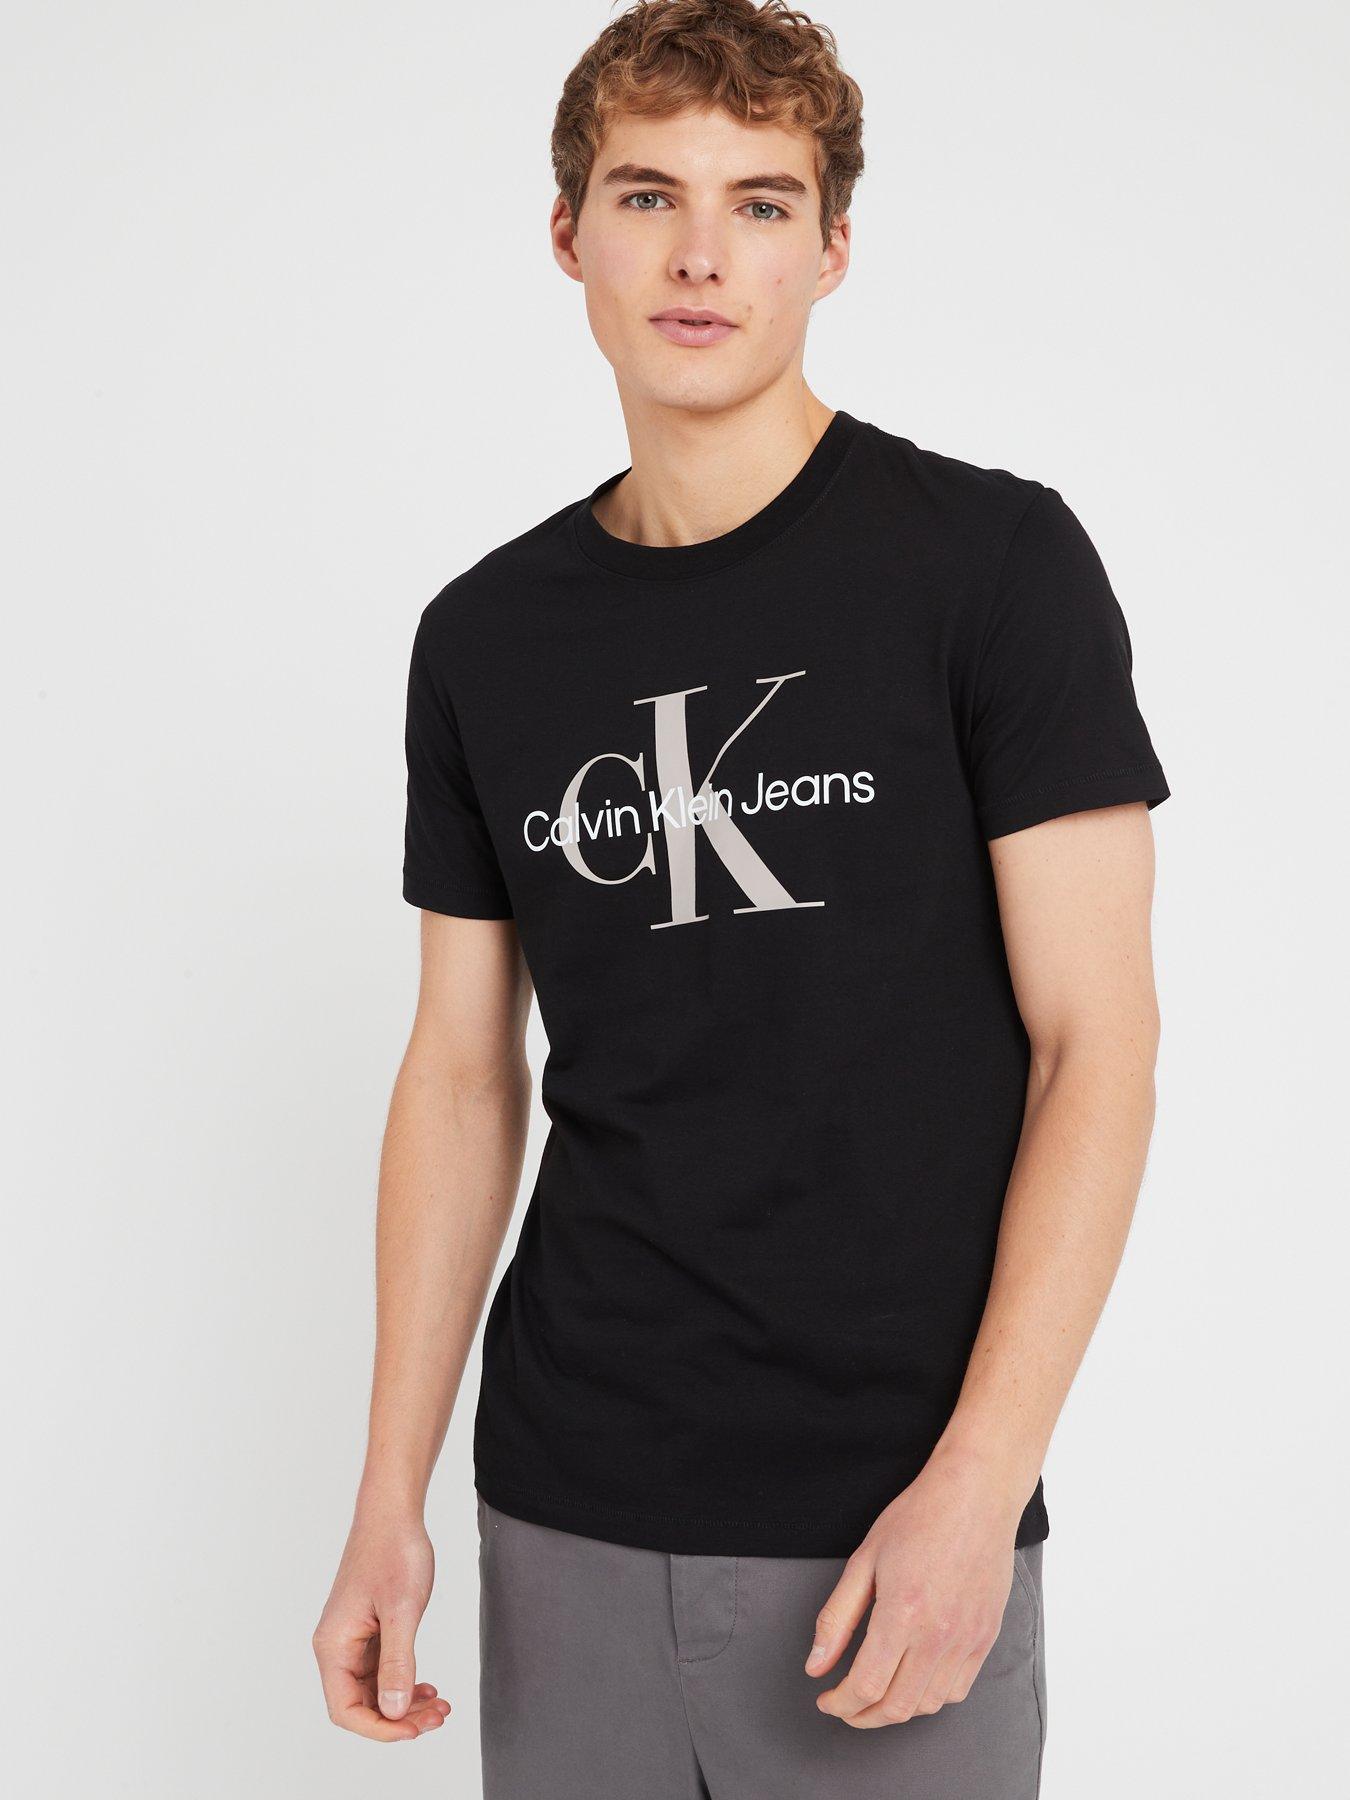 | & | Calvin Very | polos | Ireland Men klein Black T-shirts